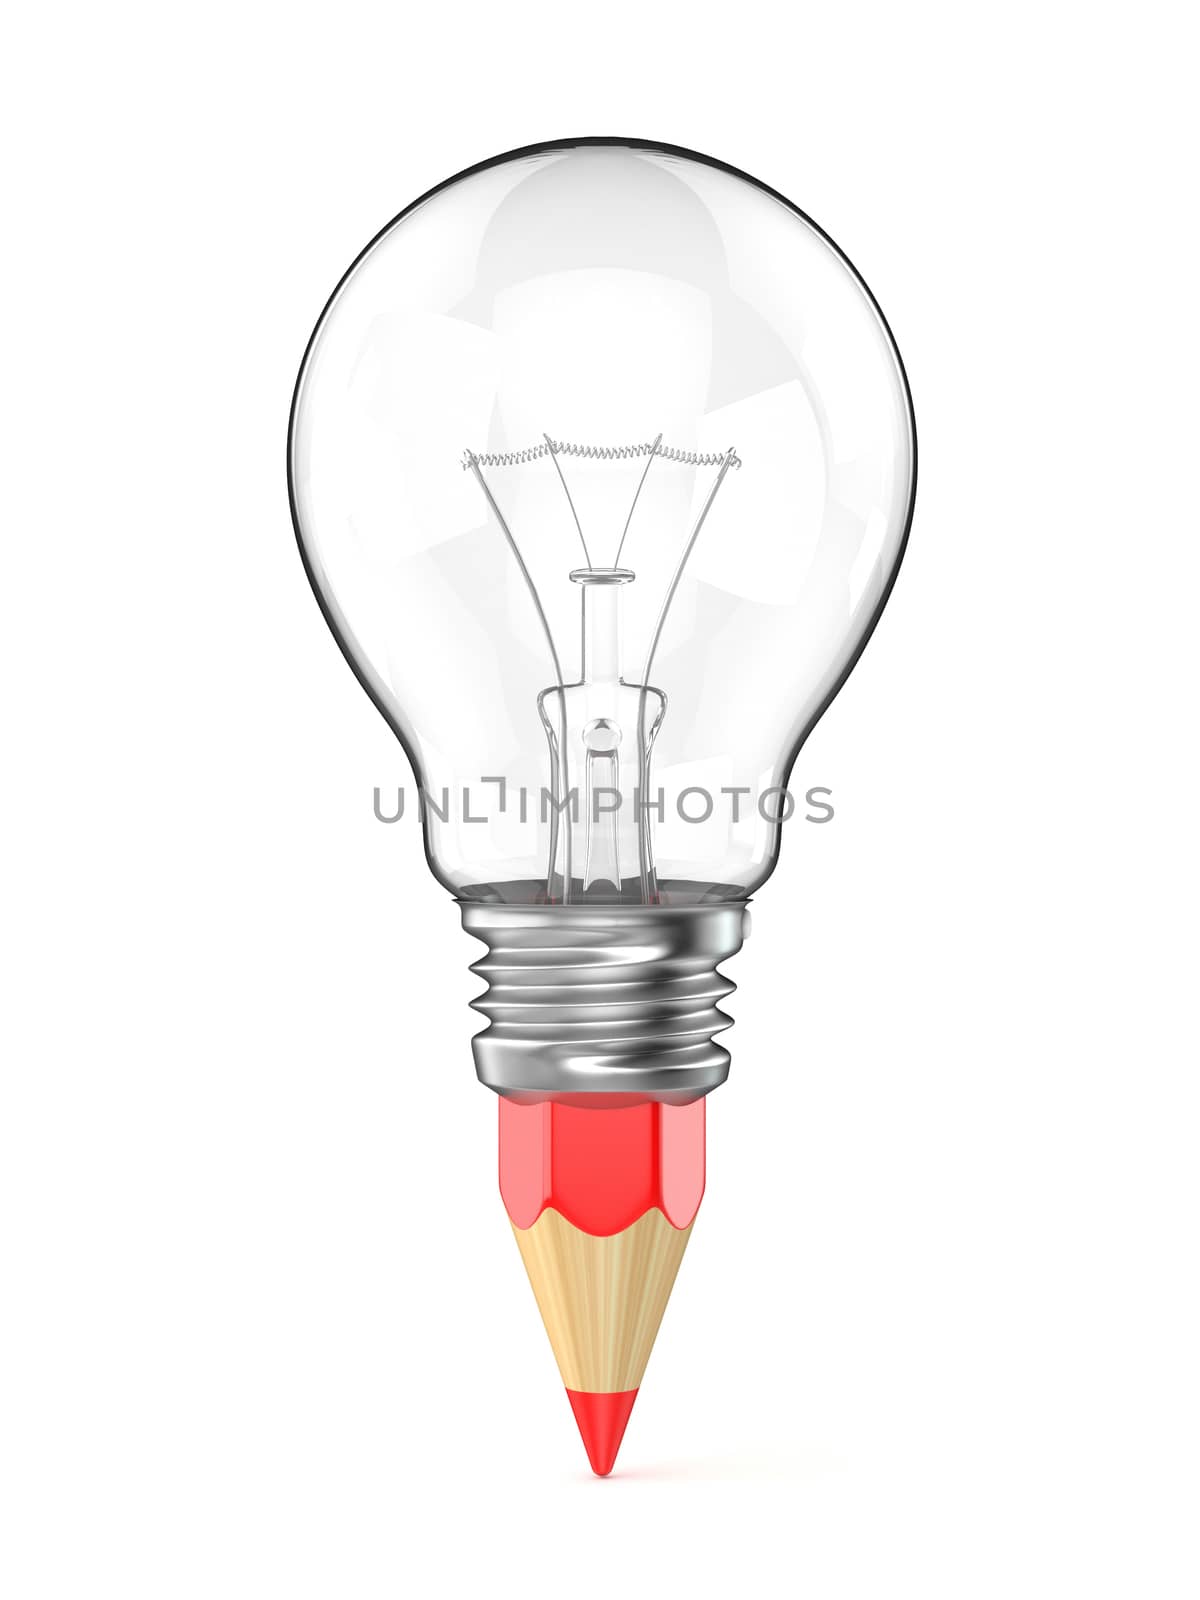 Pencil light bulb as creative concept. 3D by djmilic